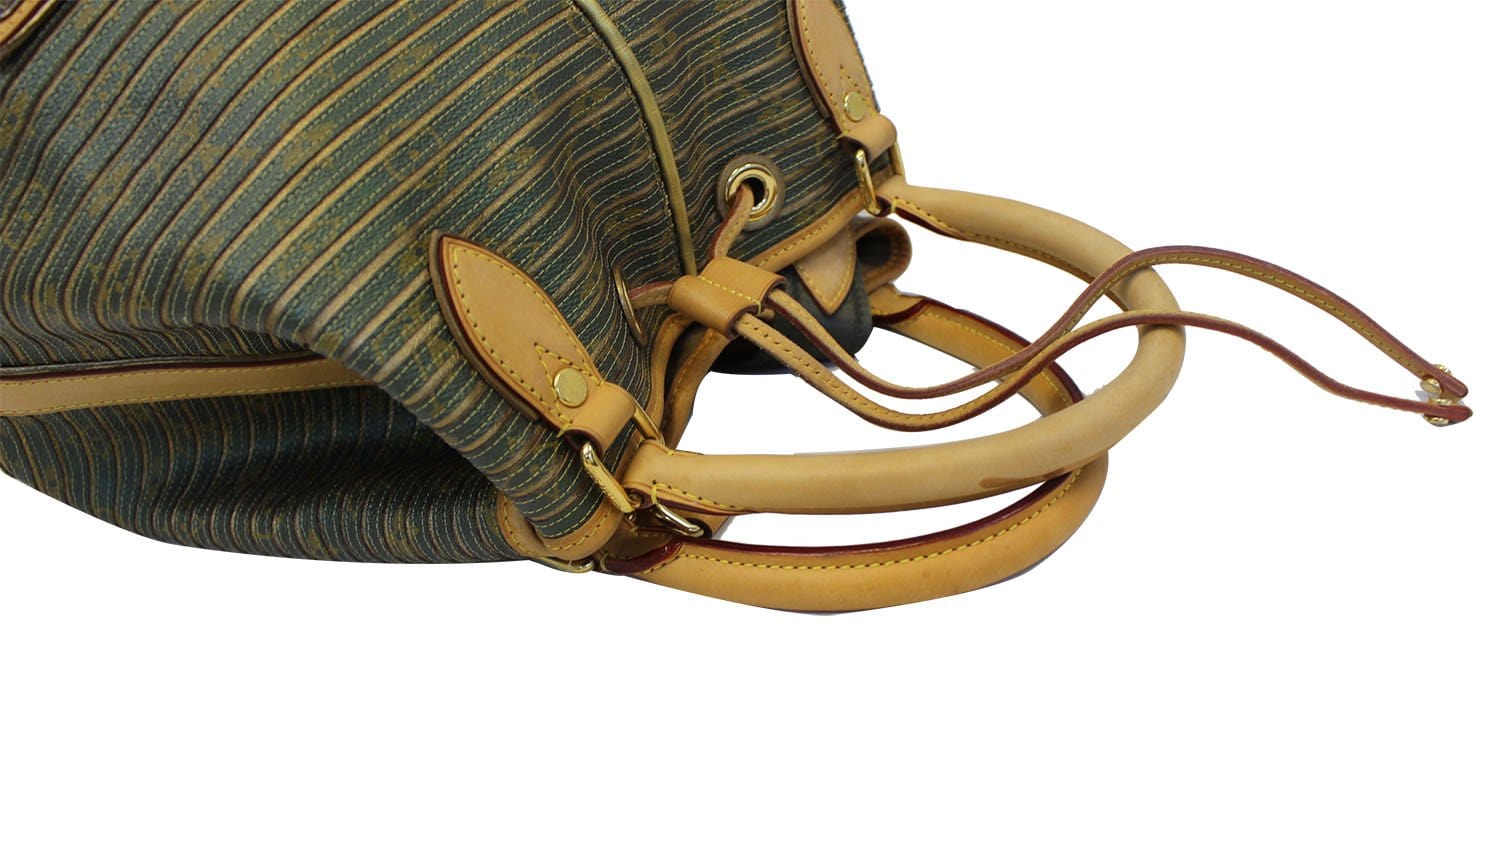 Louis Vuitton Monogram Eden Neo 2way Shoulder Bag - A World Of